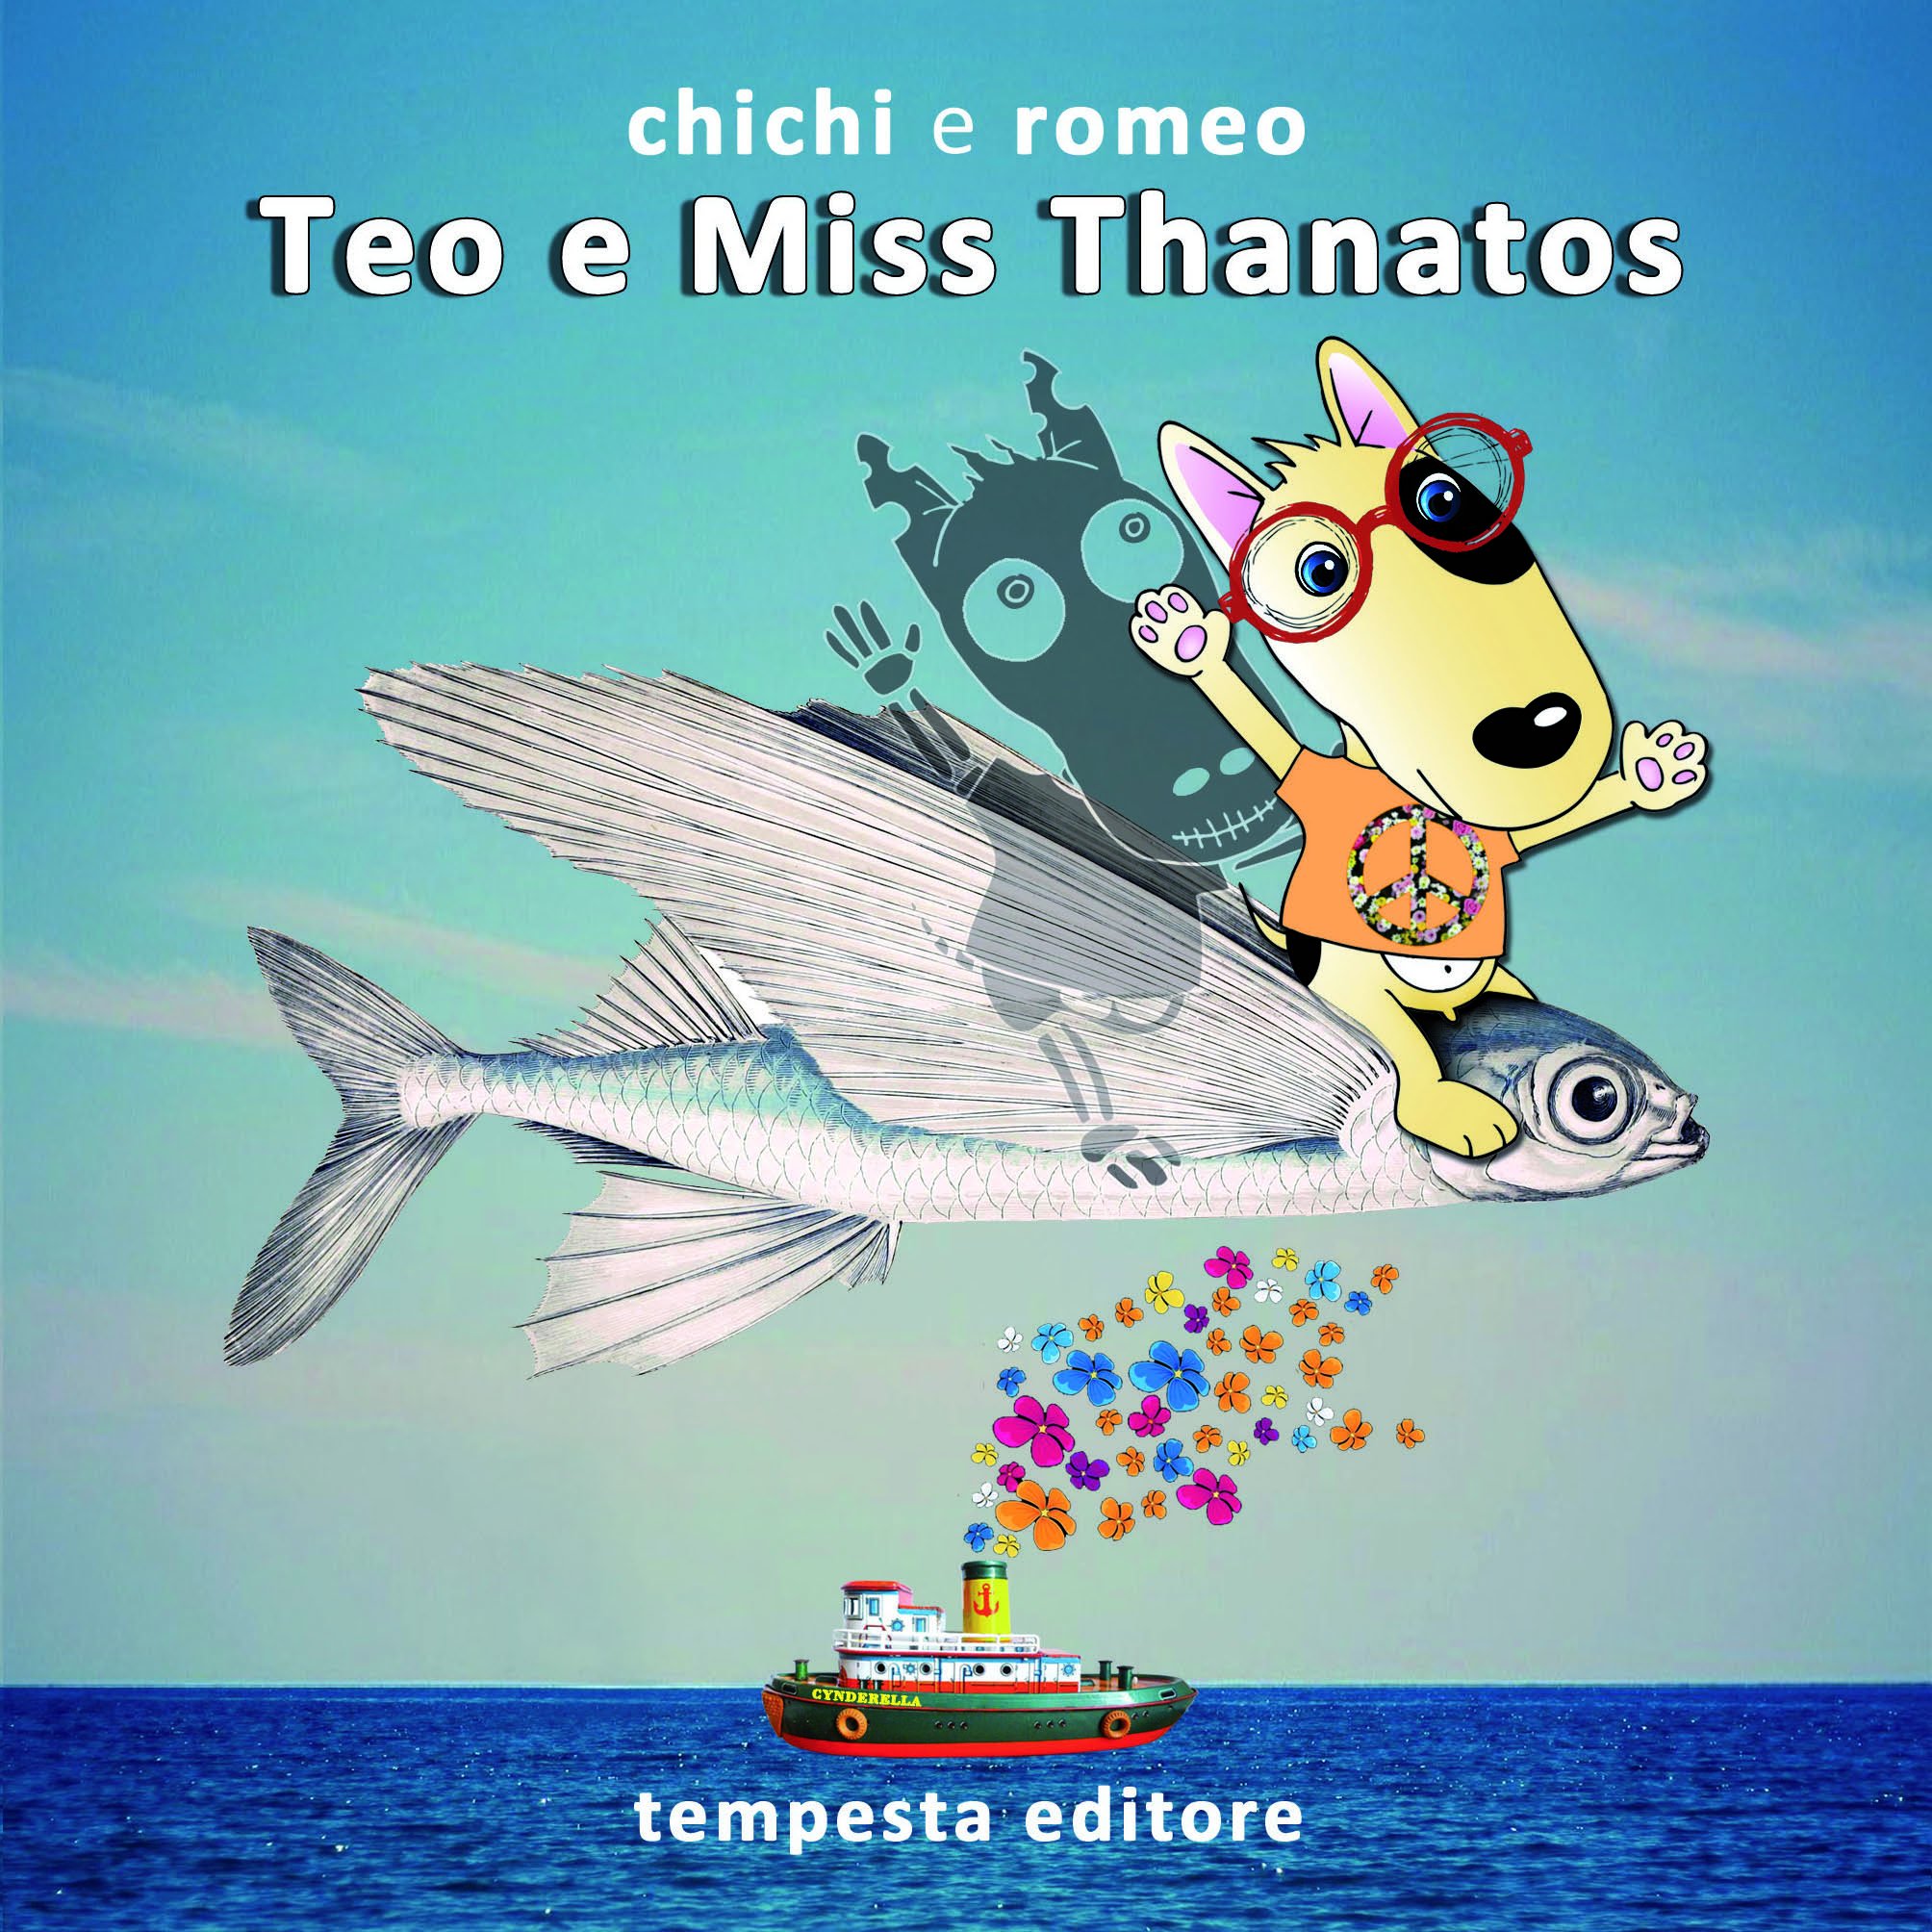 Chichi, Romeo. (2015). Teo e miss Thanatos. Tempesta Editore